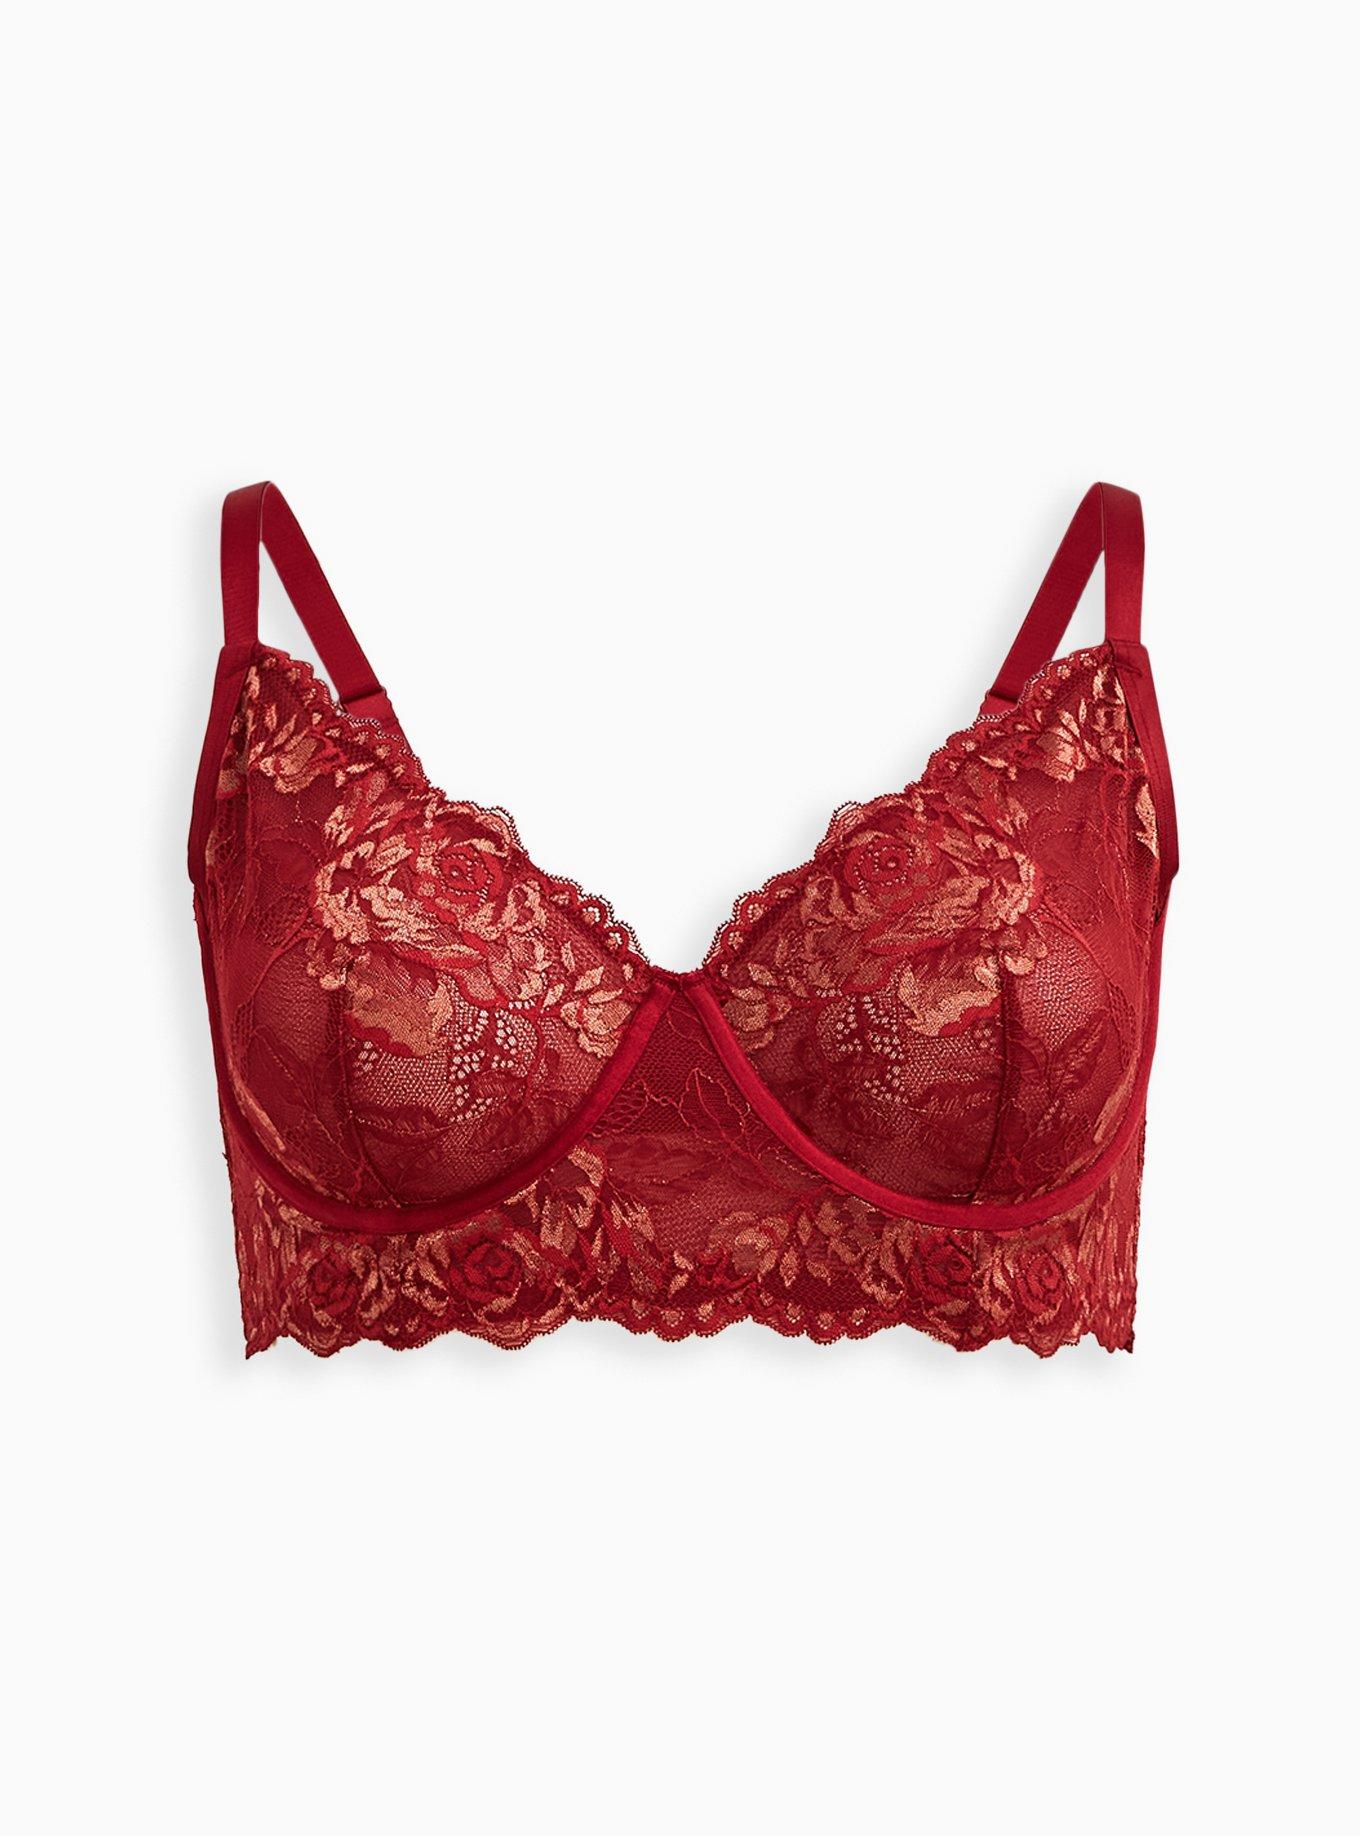 torrid, Intimates & Sleepwear, Red Lace Bralette 2 2x 8 2 Nwt Torrid New